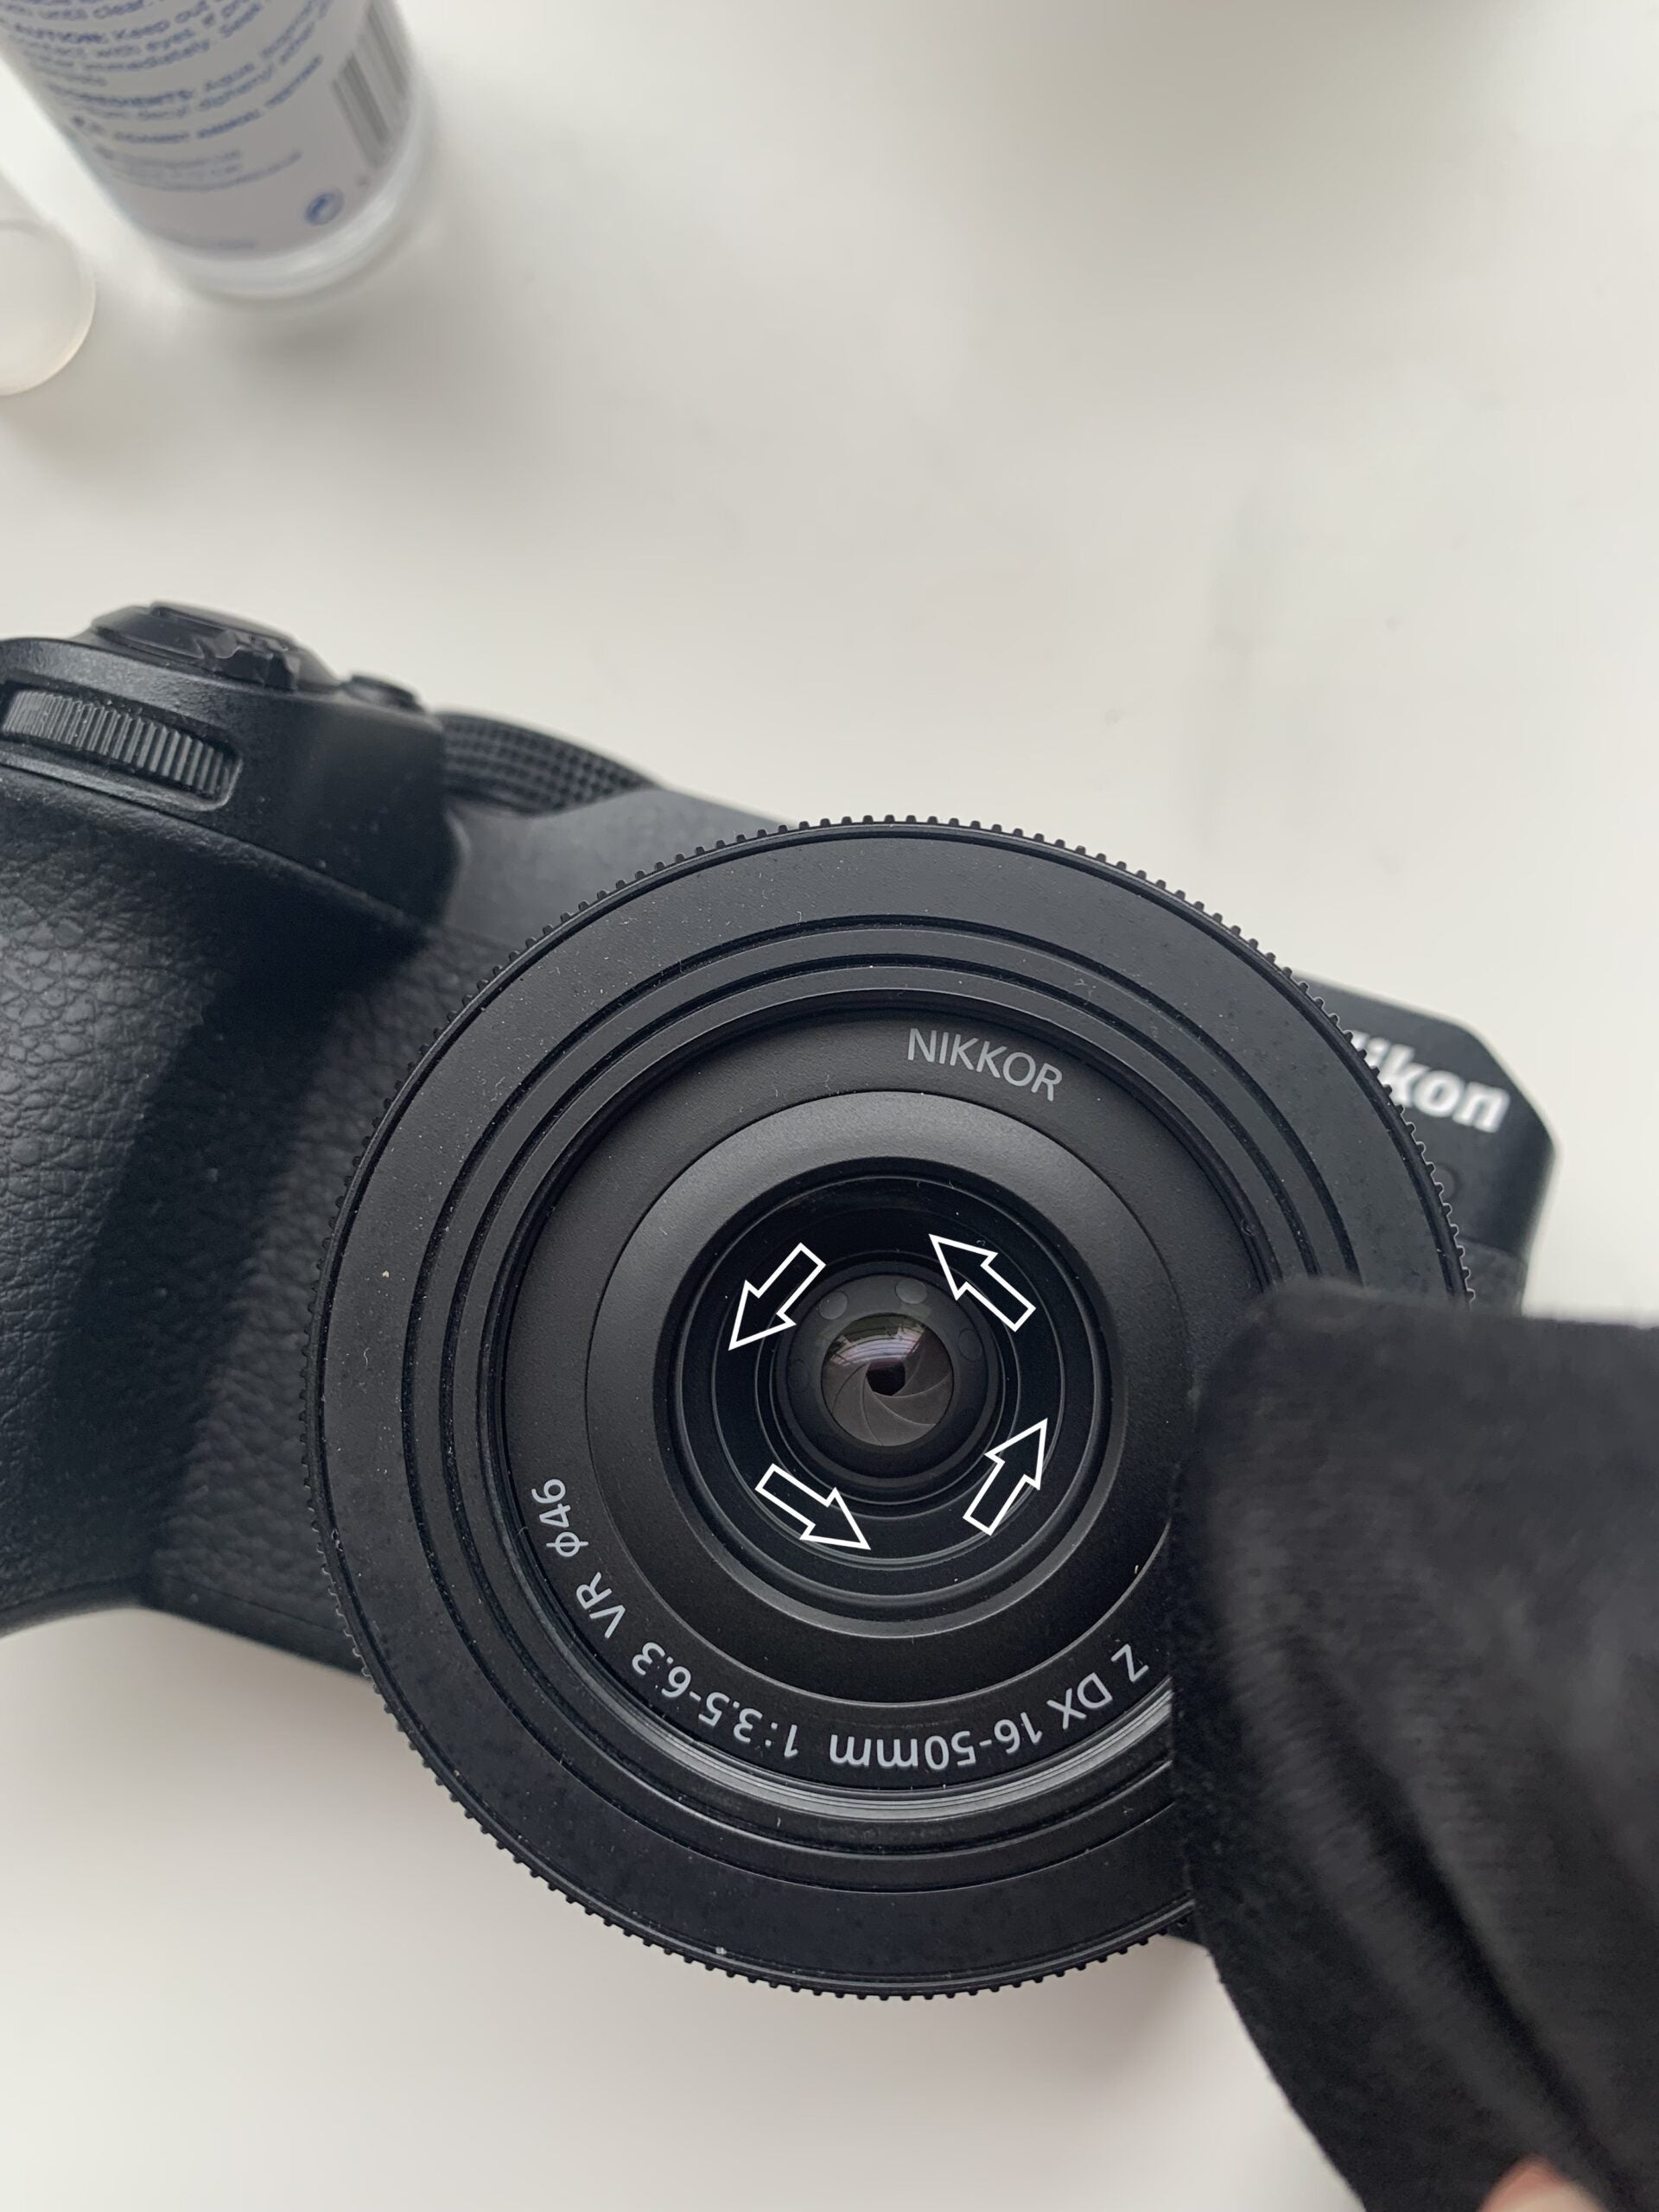 Cara membersihkan lensa kamera